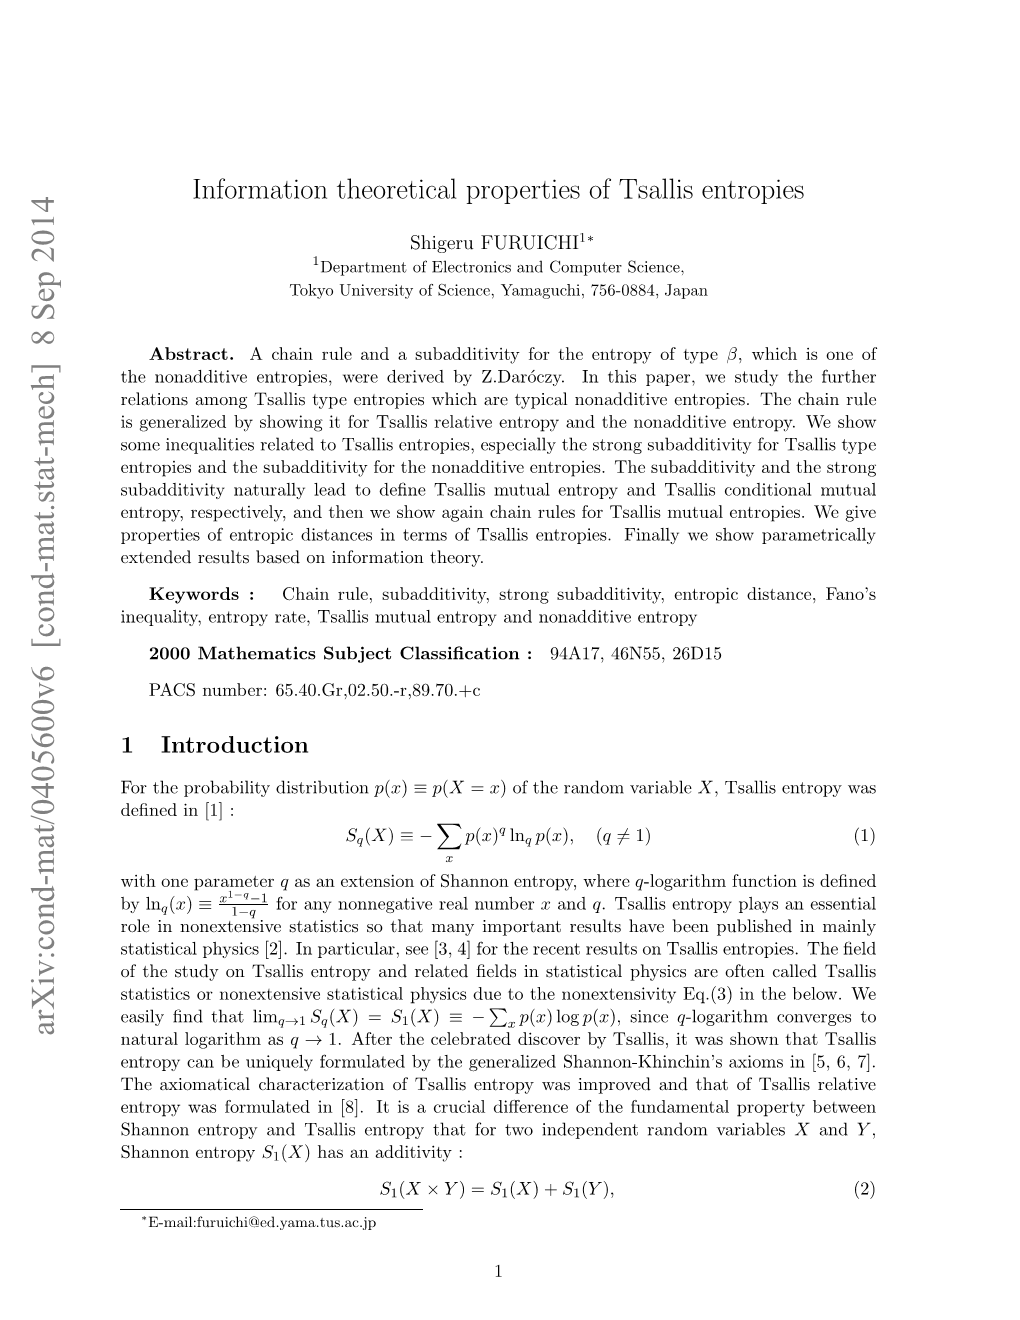 Information Theoretical Properties of Tsallis Entropies